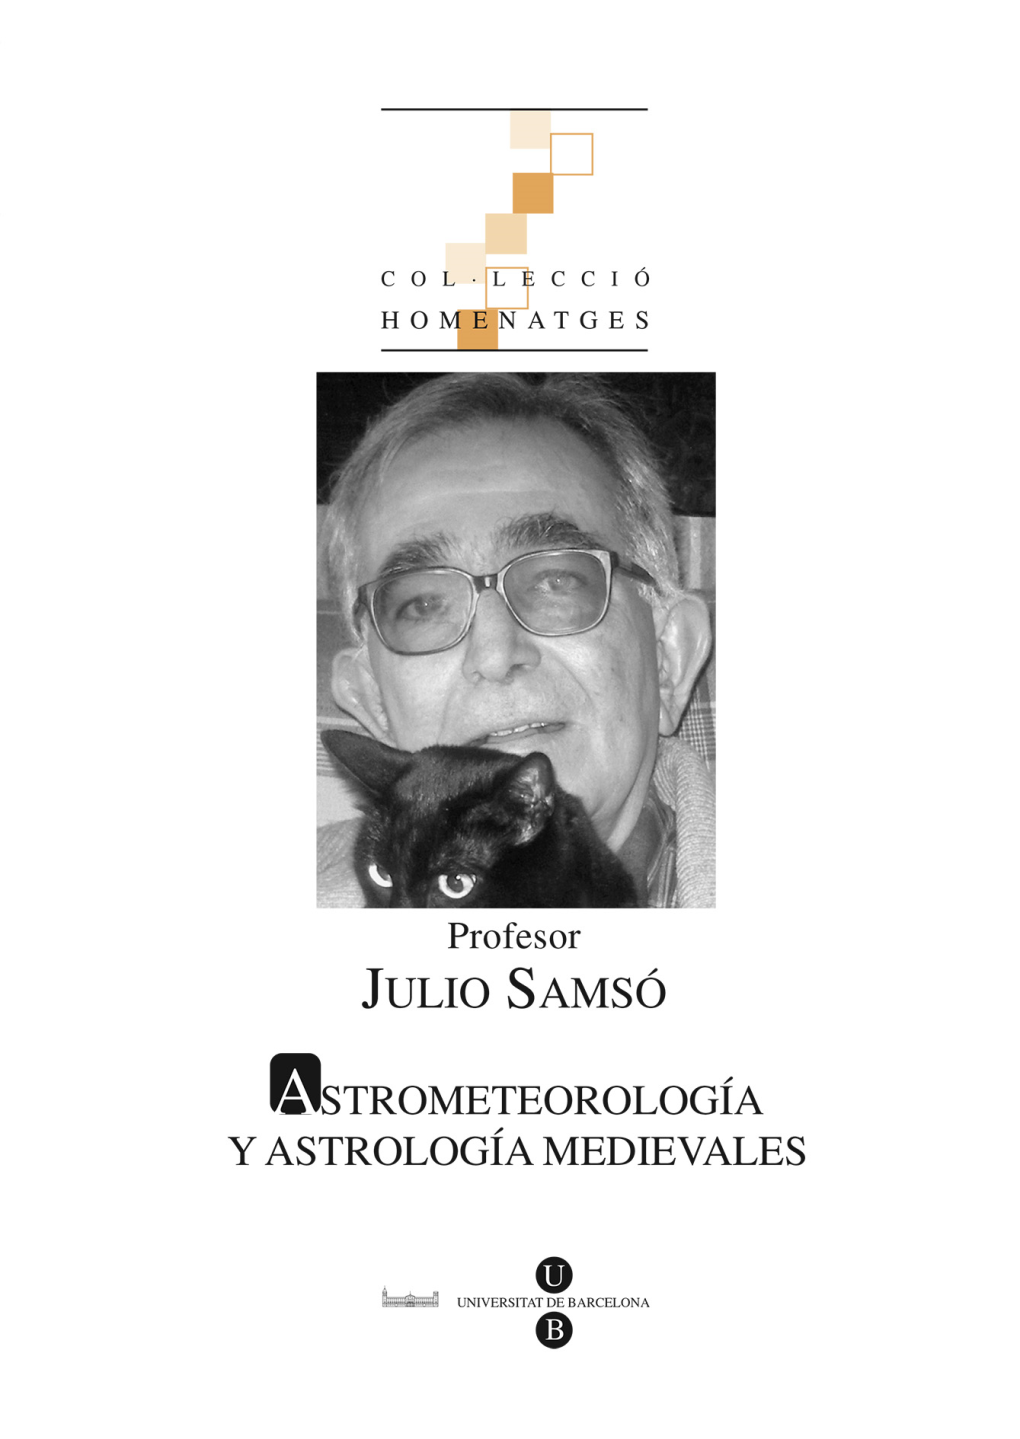 Profesor JULIO SAMSÓ